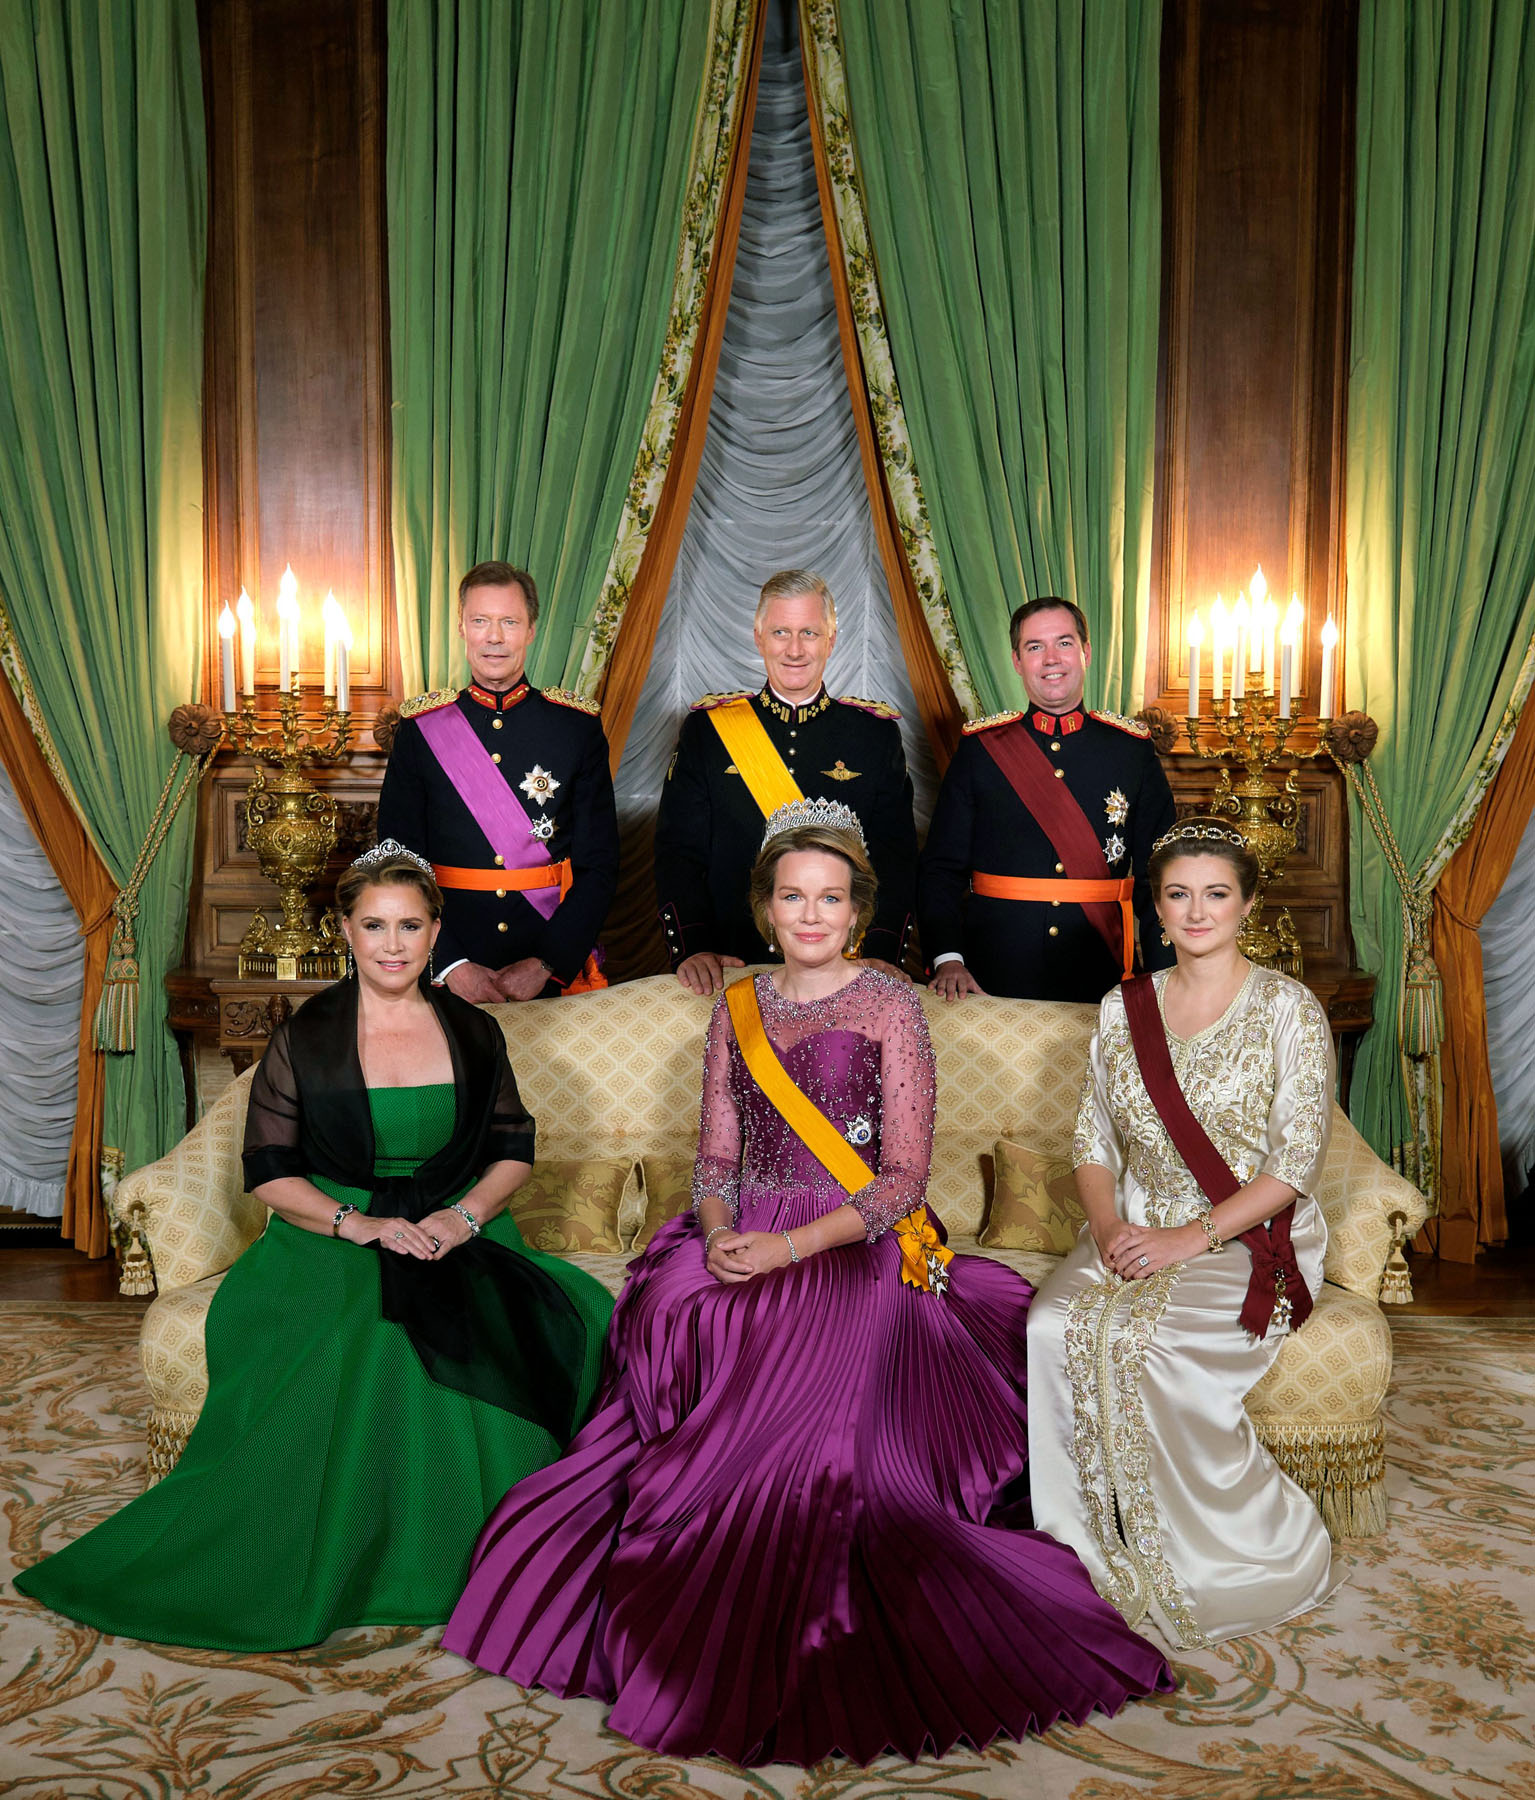 Злодейка пленила великого герцога 8. Король и Королева Люксембург Анри. Анри (Великий герцог Люксембурга). Герцогиня Люксембурга. Королевская семья Люксембурга.